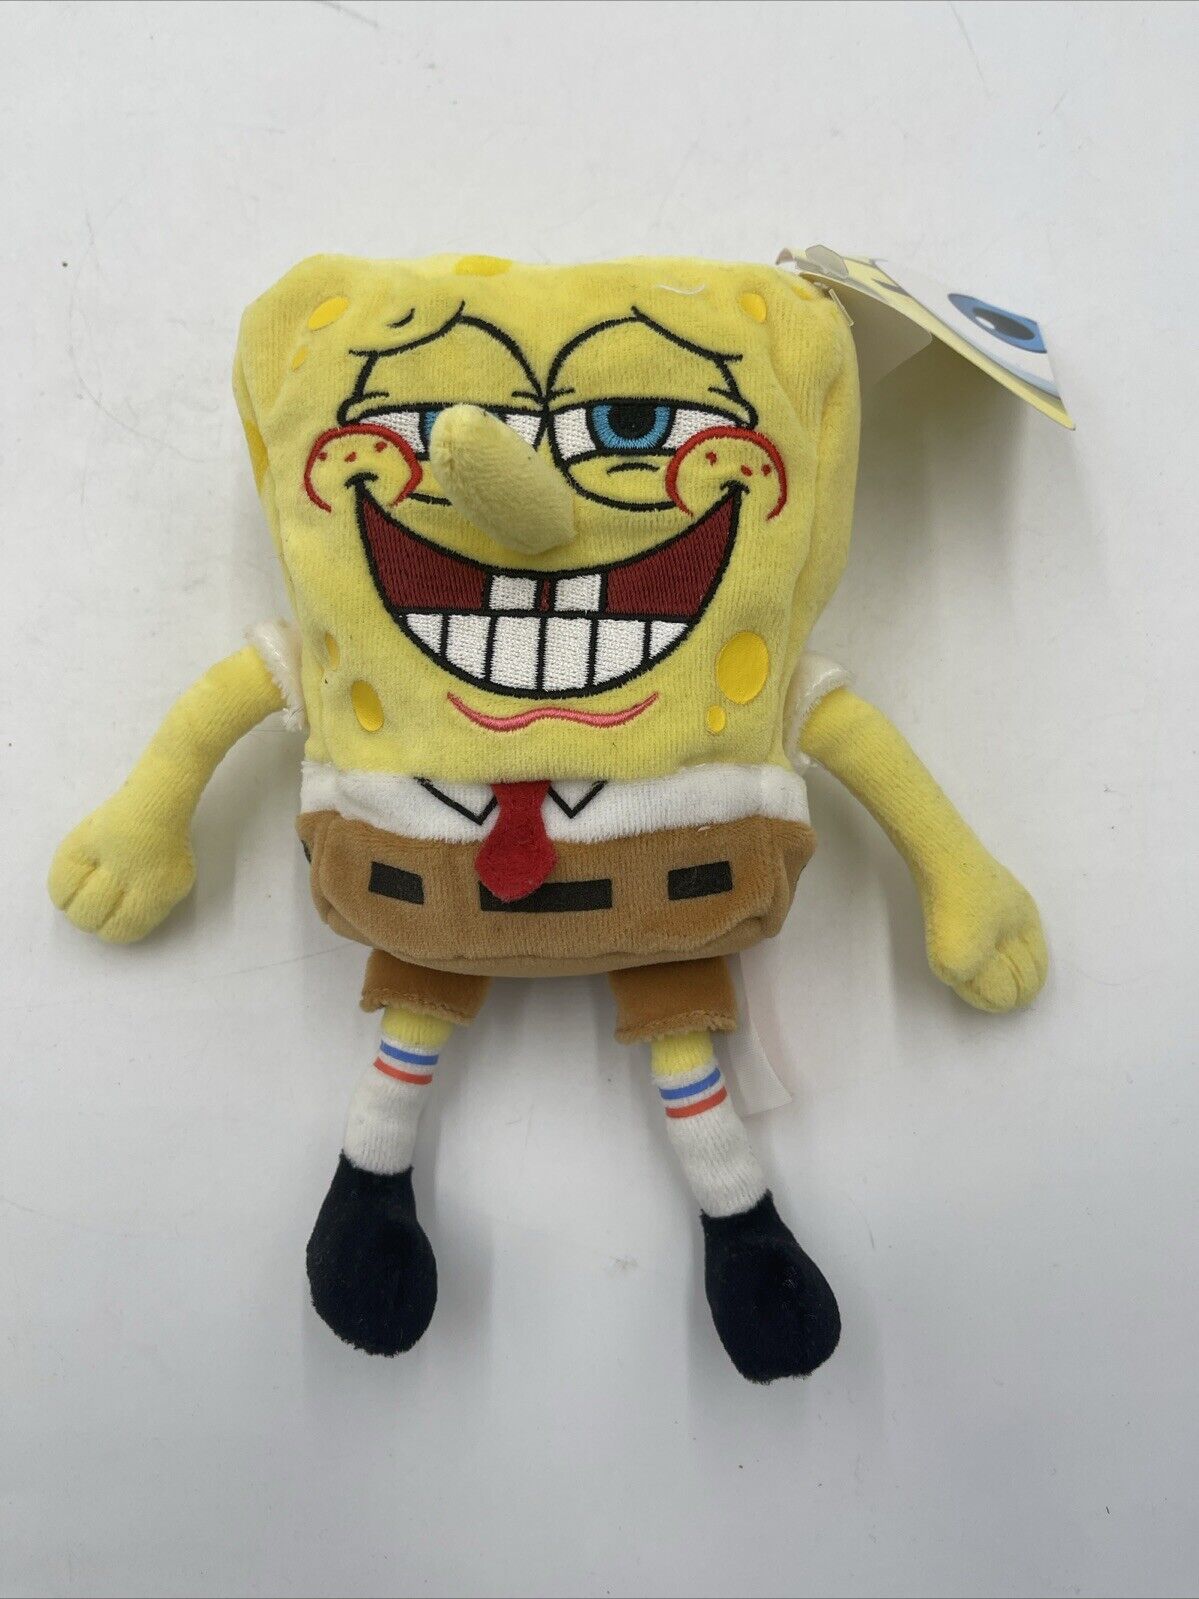 Nickelodeon 2008 SpongeBob SquarePants Stuffed Toy Plush Animation New NWT